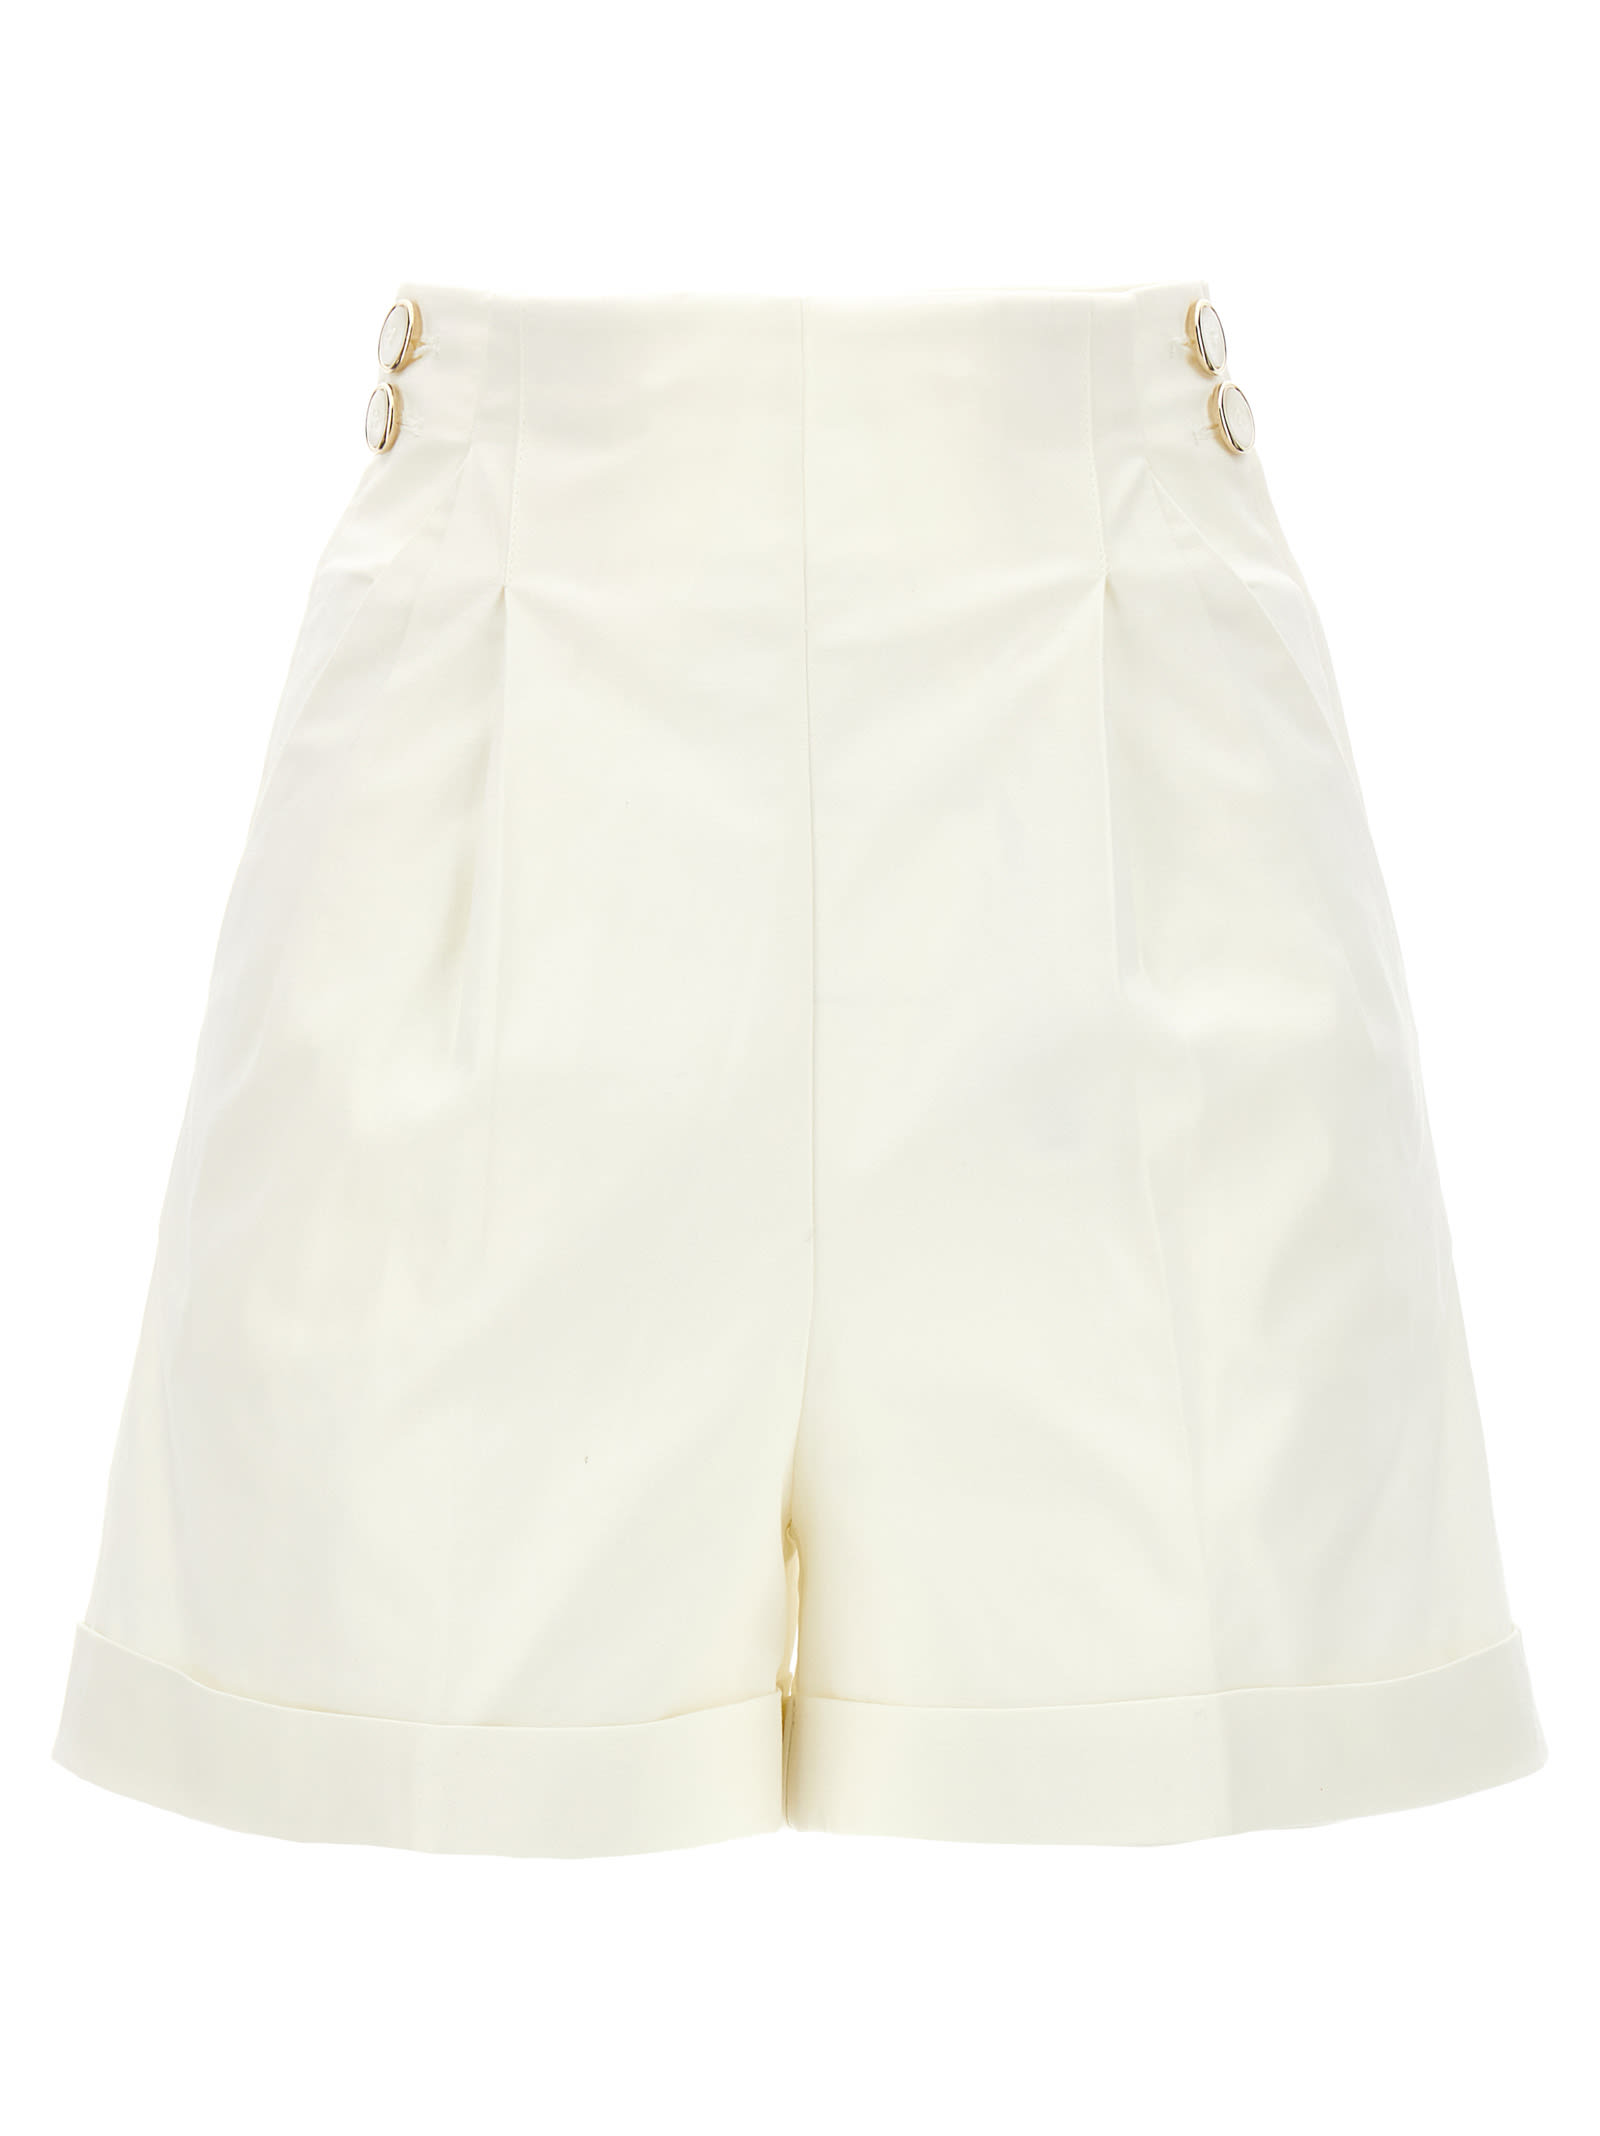 chrysant kalkoen Zonder LIU JO frayed-edge belted shorts | Smart Closet